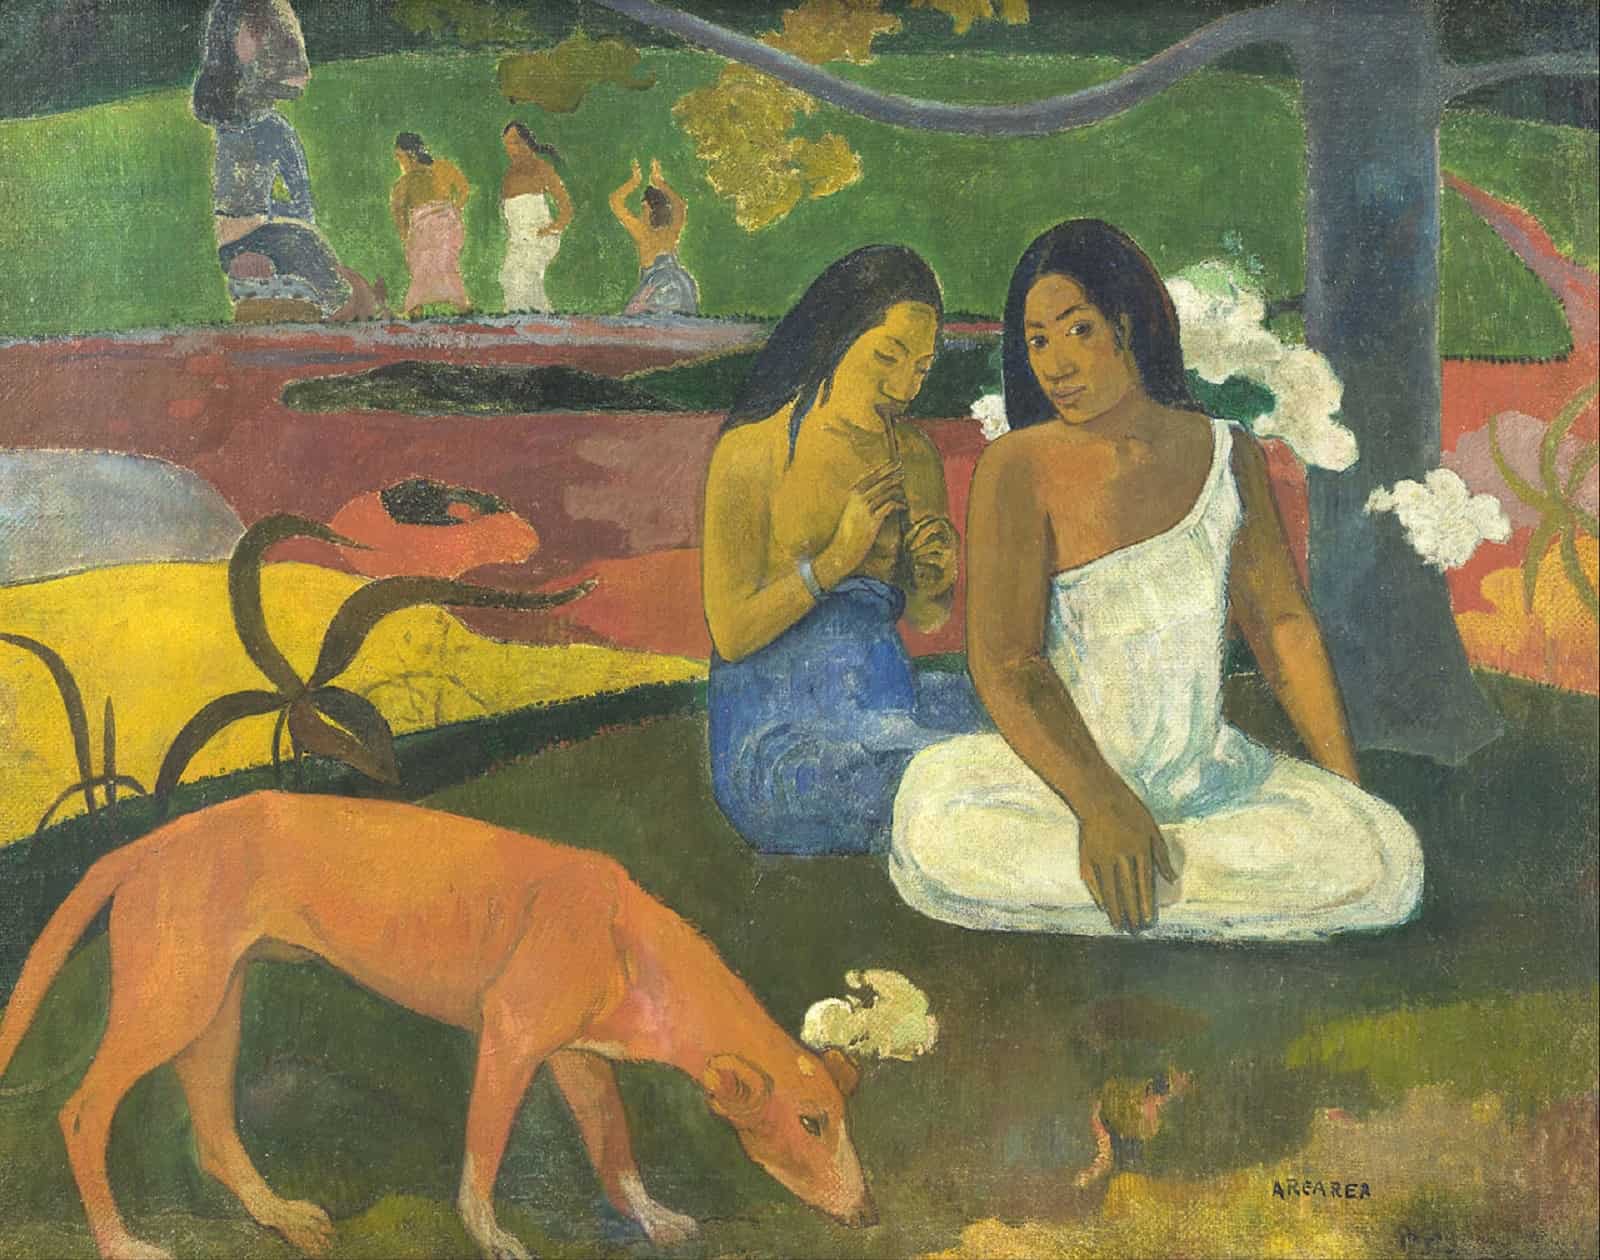 arearea painting by Paul Gauguin